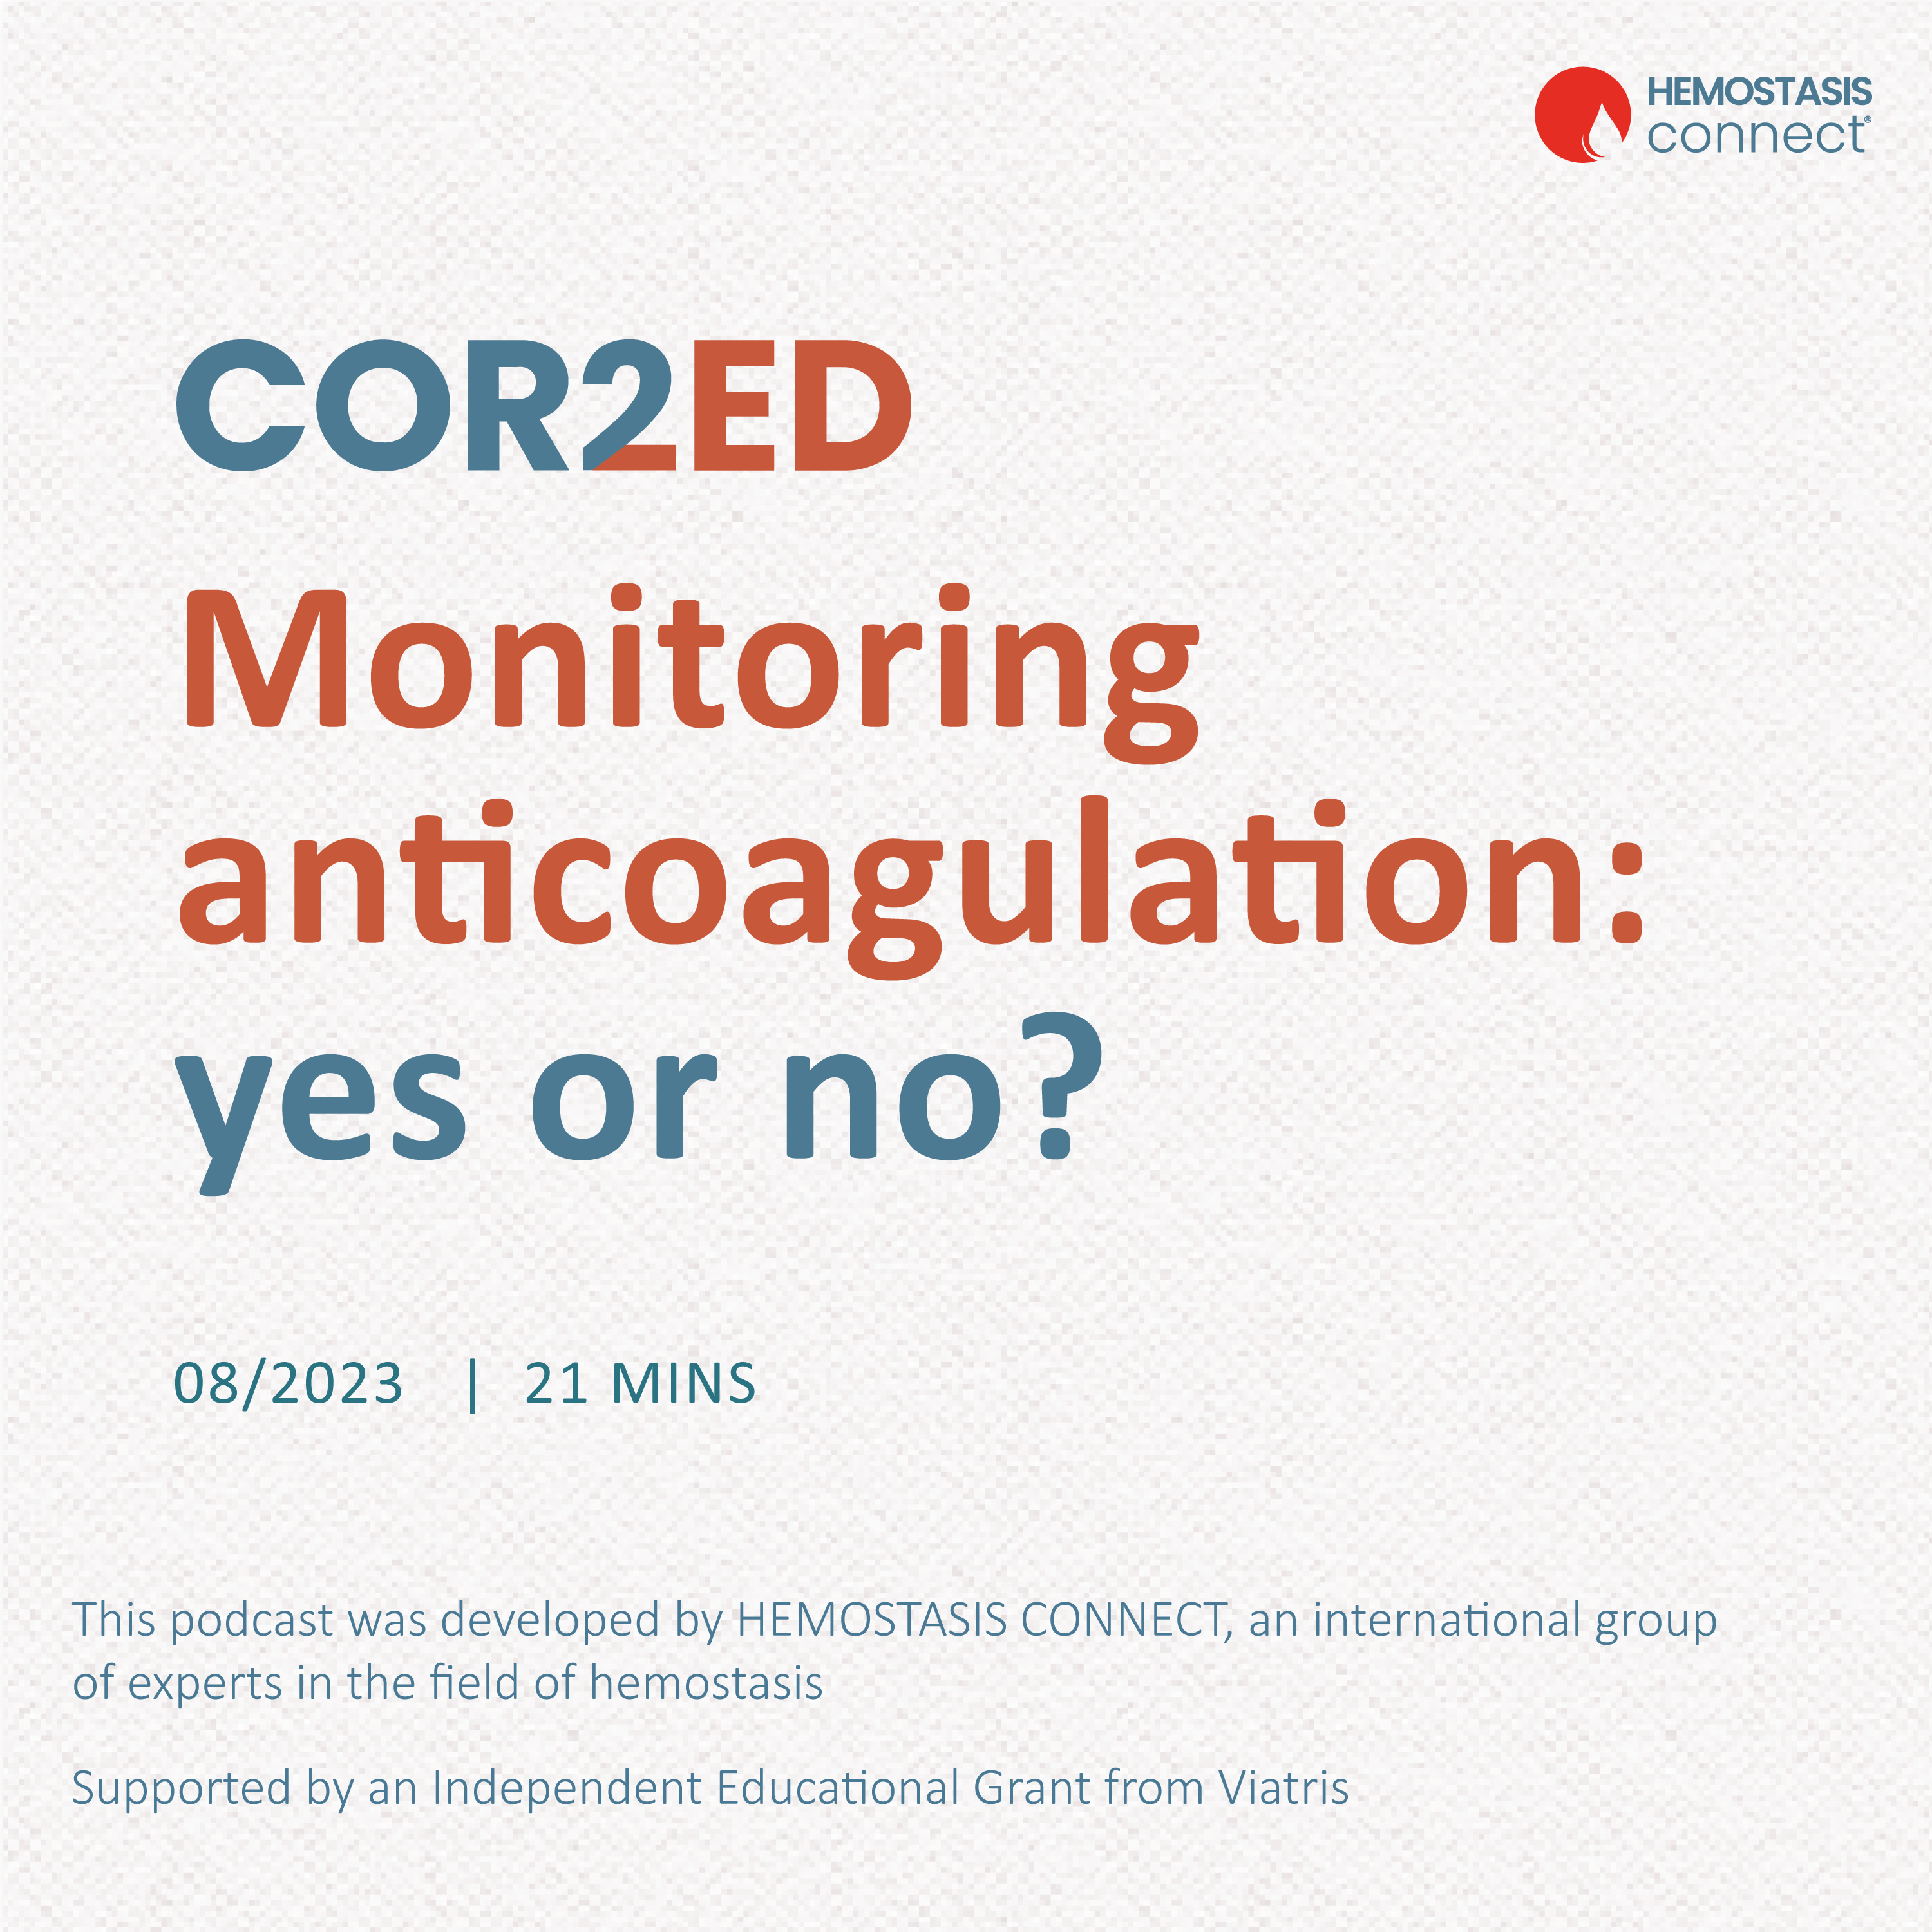 Monitoring anticoagulation: yes or no?